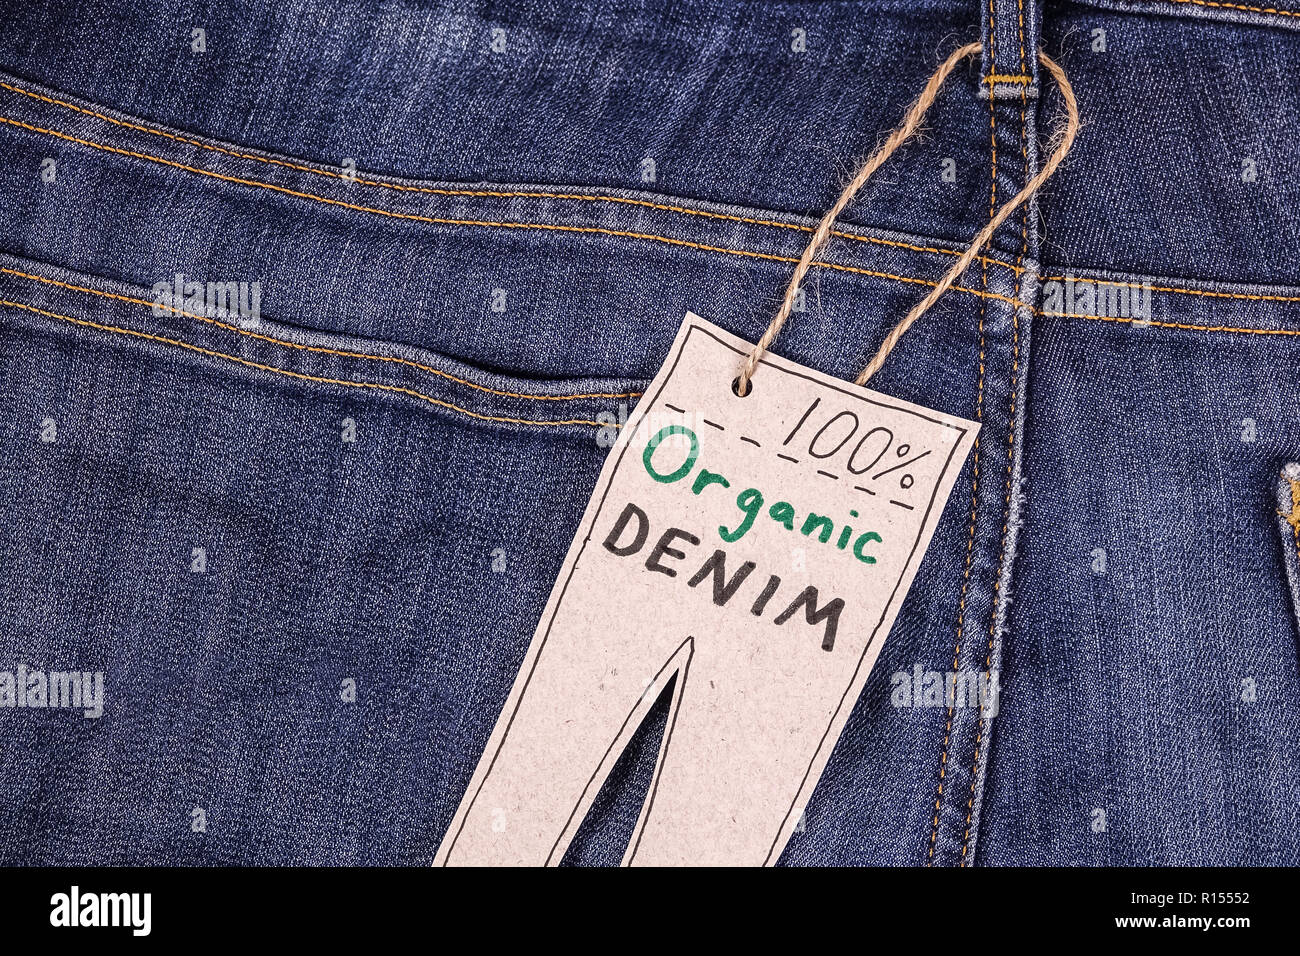 Ropa orgánica. Cerca de blue jeans pantalones de mezclilla con etiqueta Fotografía stock - Alamy